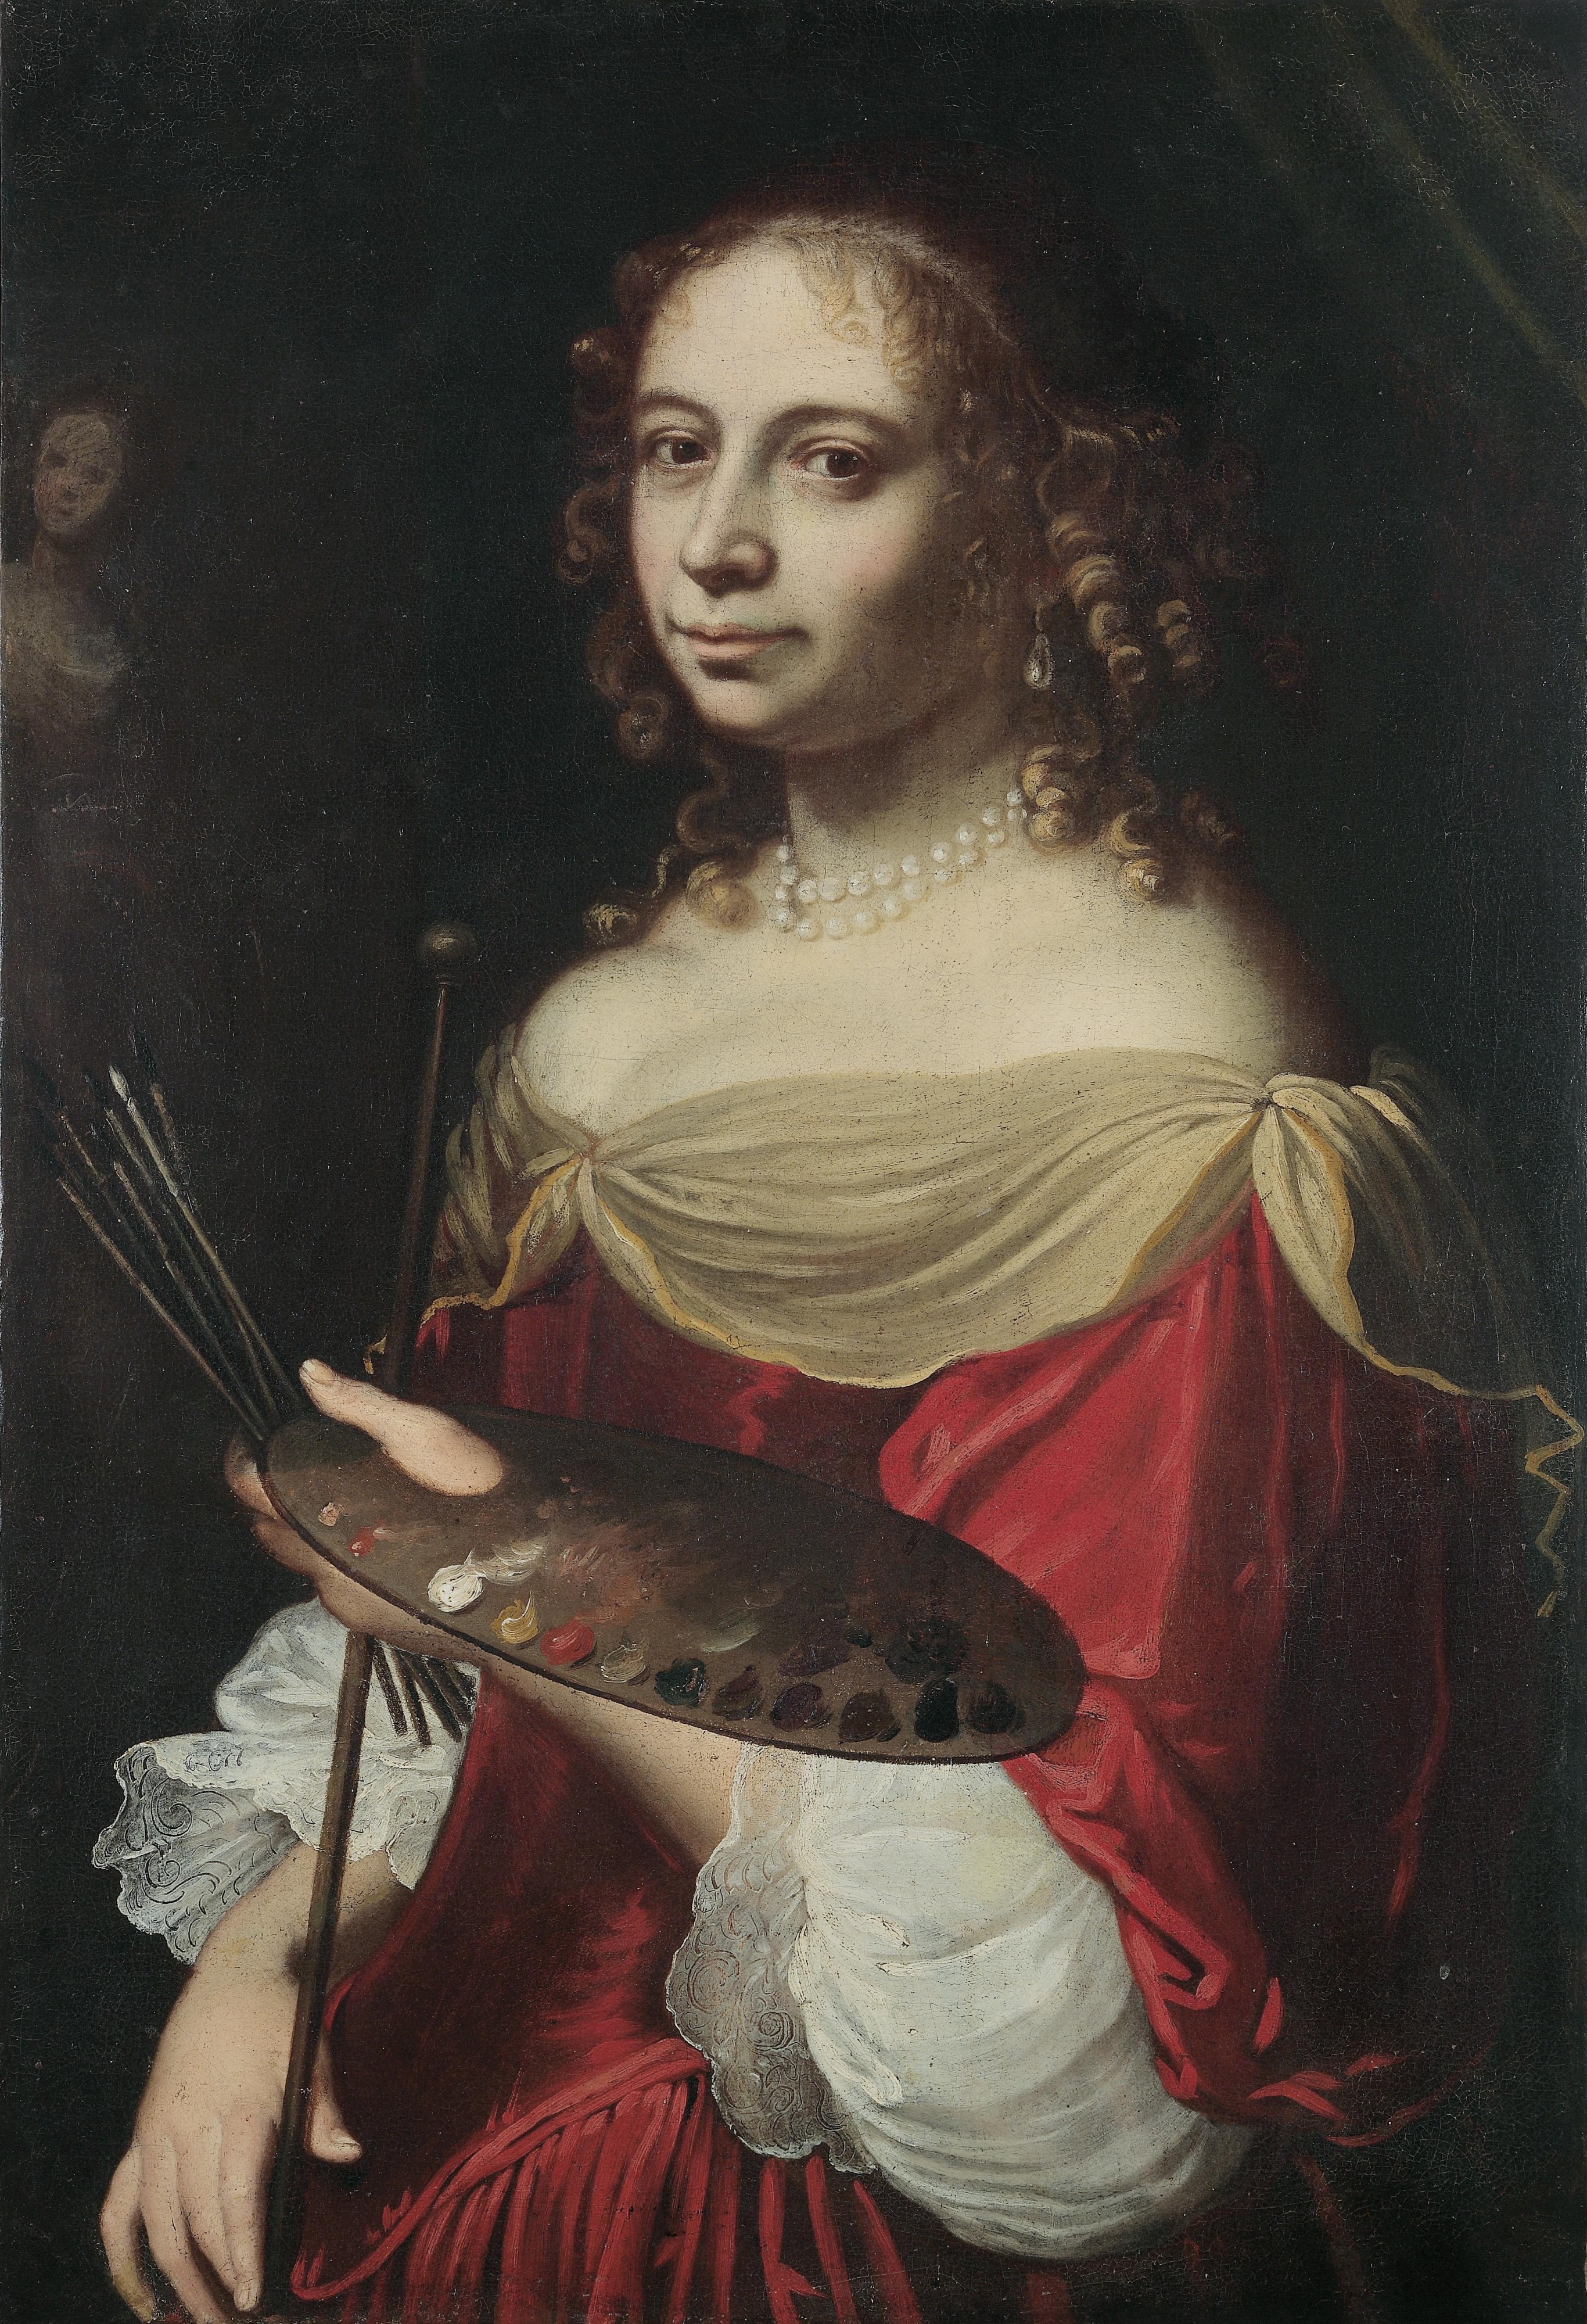 Self portrait of a female painter Bologna 17th century